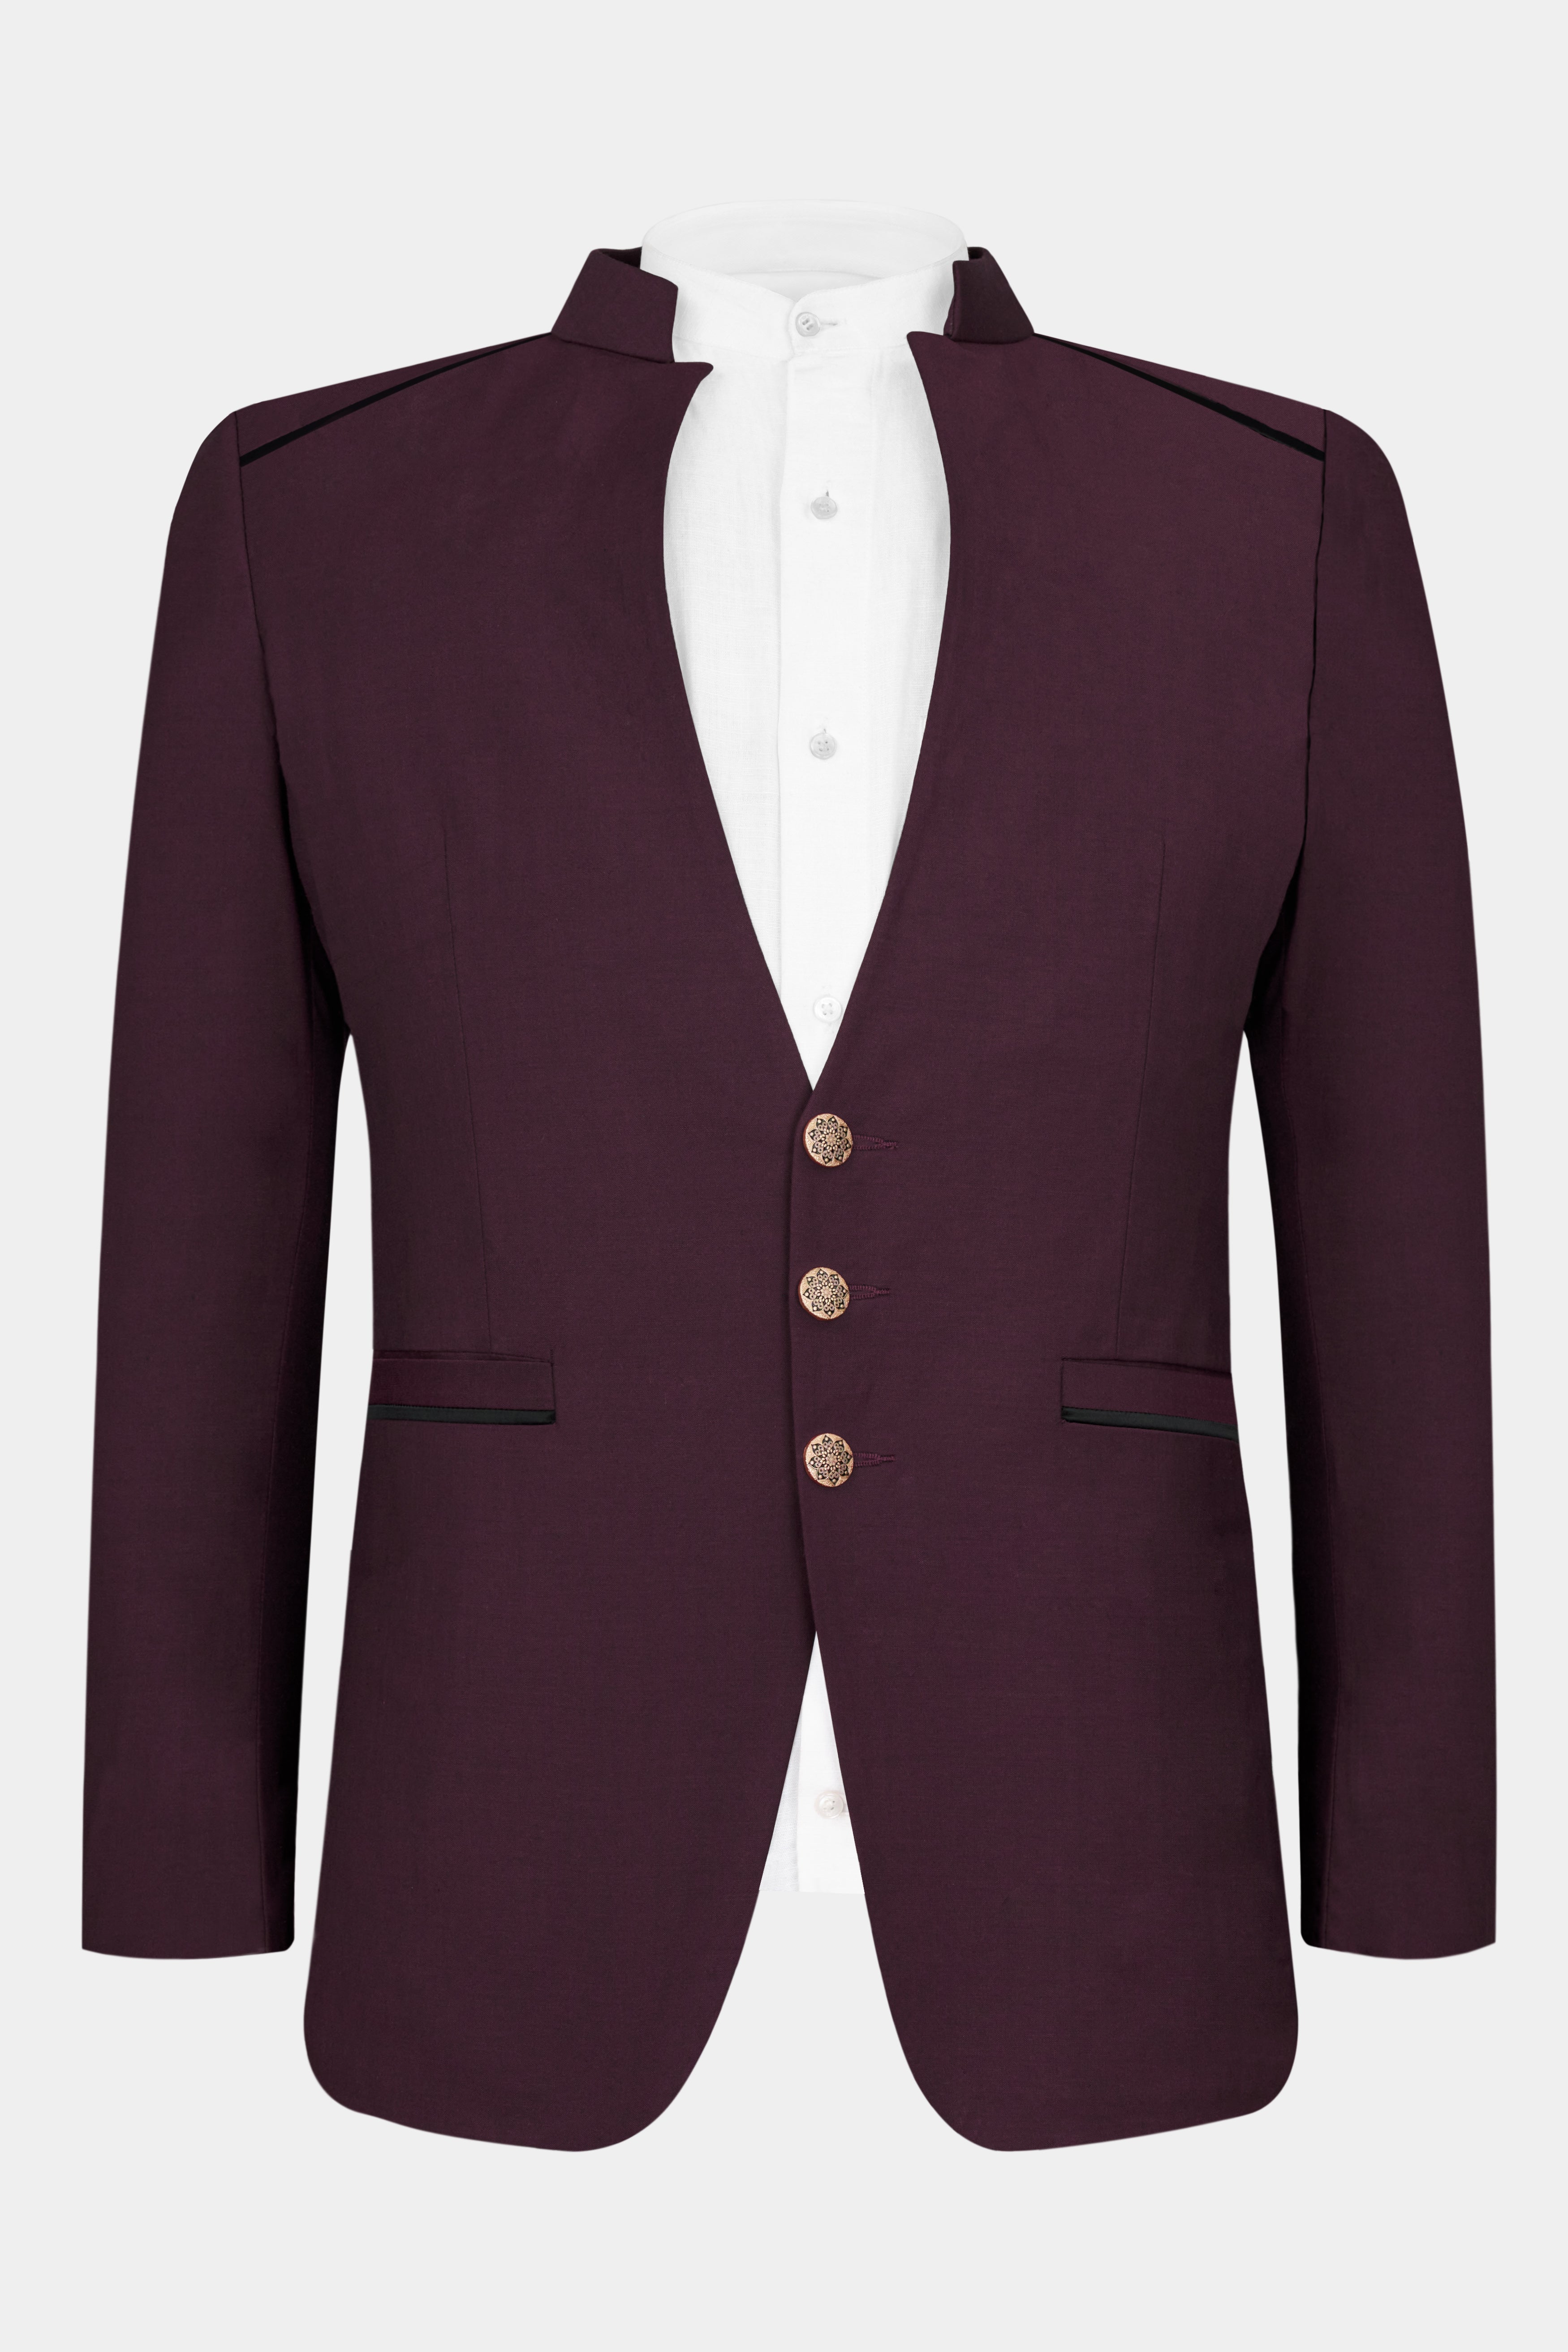 Bordeaux Maroon Plain-Solid Premium Wool Blend Bandhgala/Jodhpuri Suits for  Men.